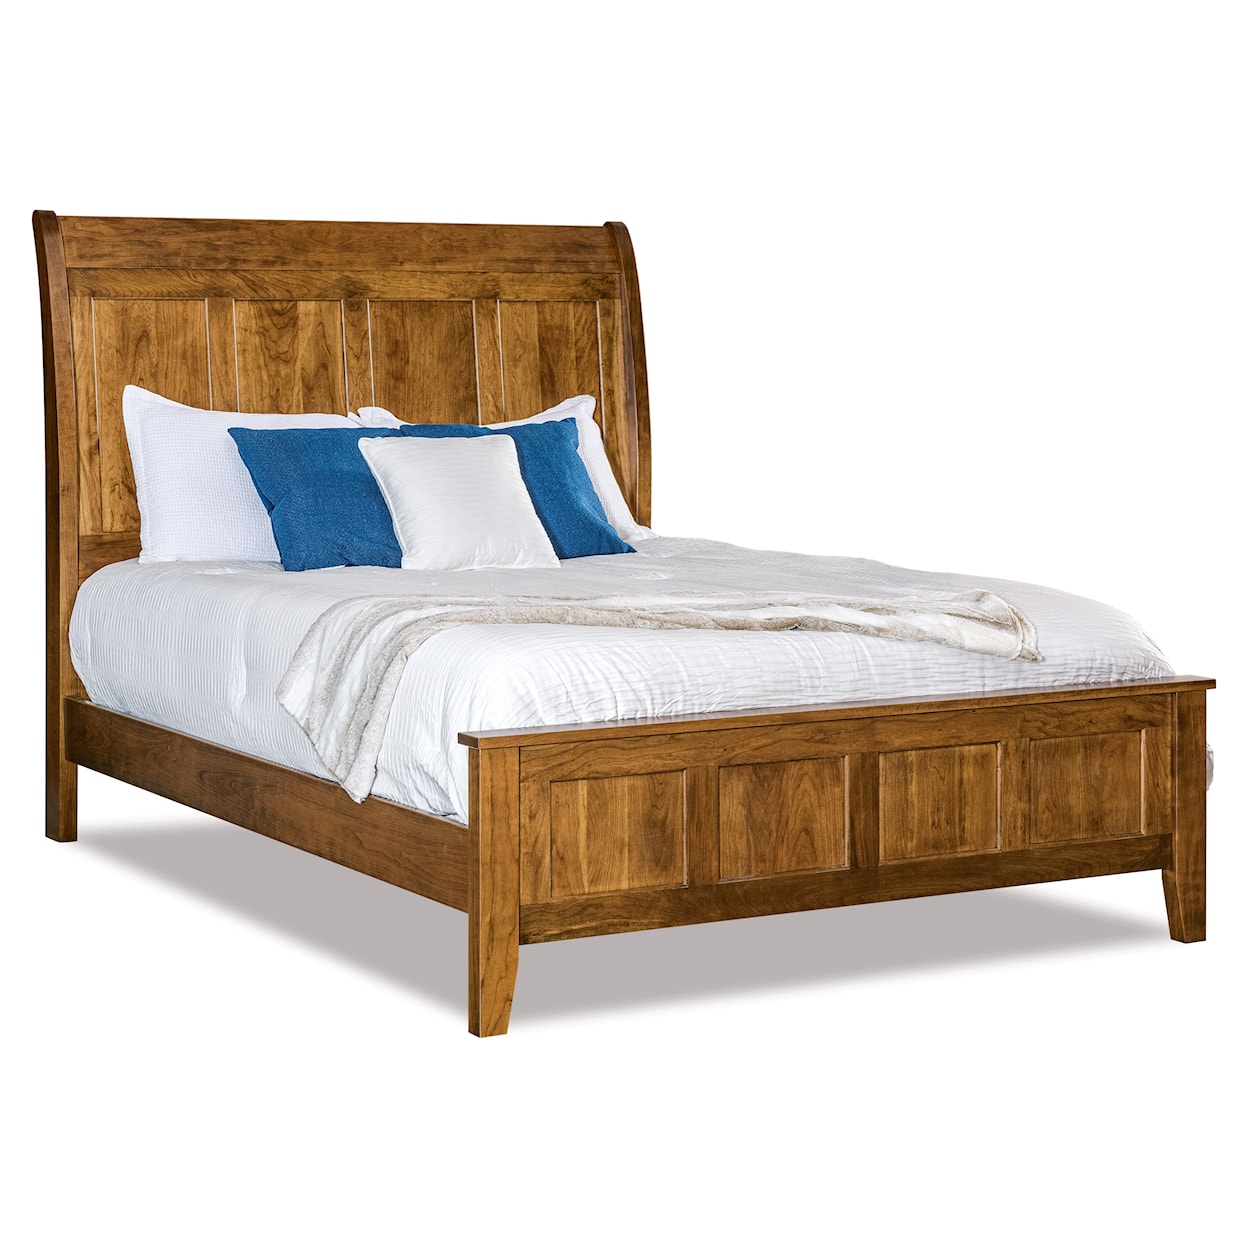 Archbold Furniture Bob Timberlake Queen Sleigh Panel Bed